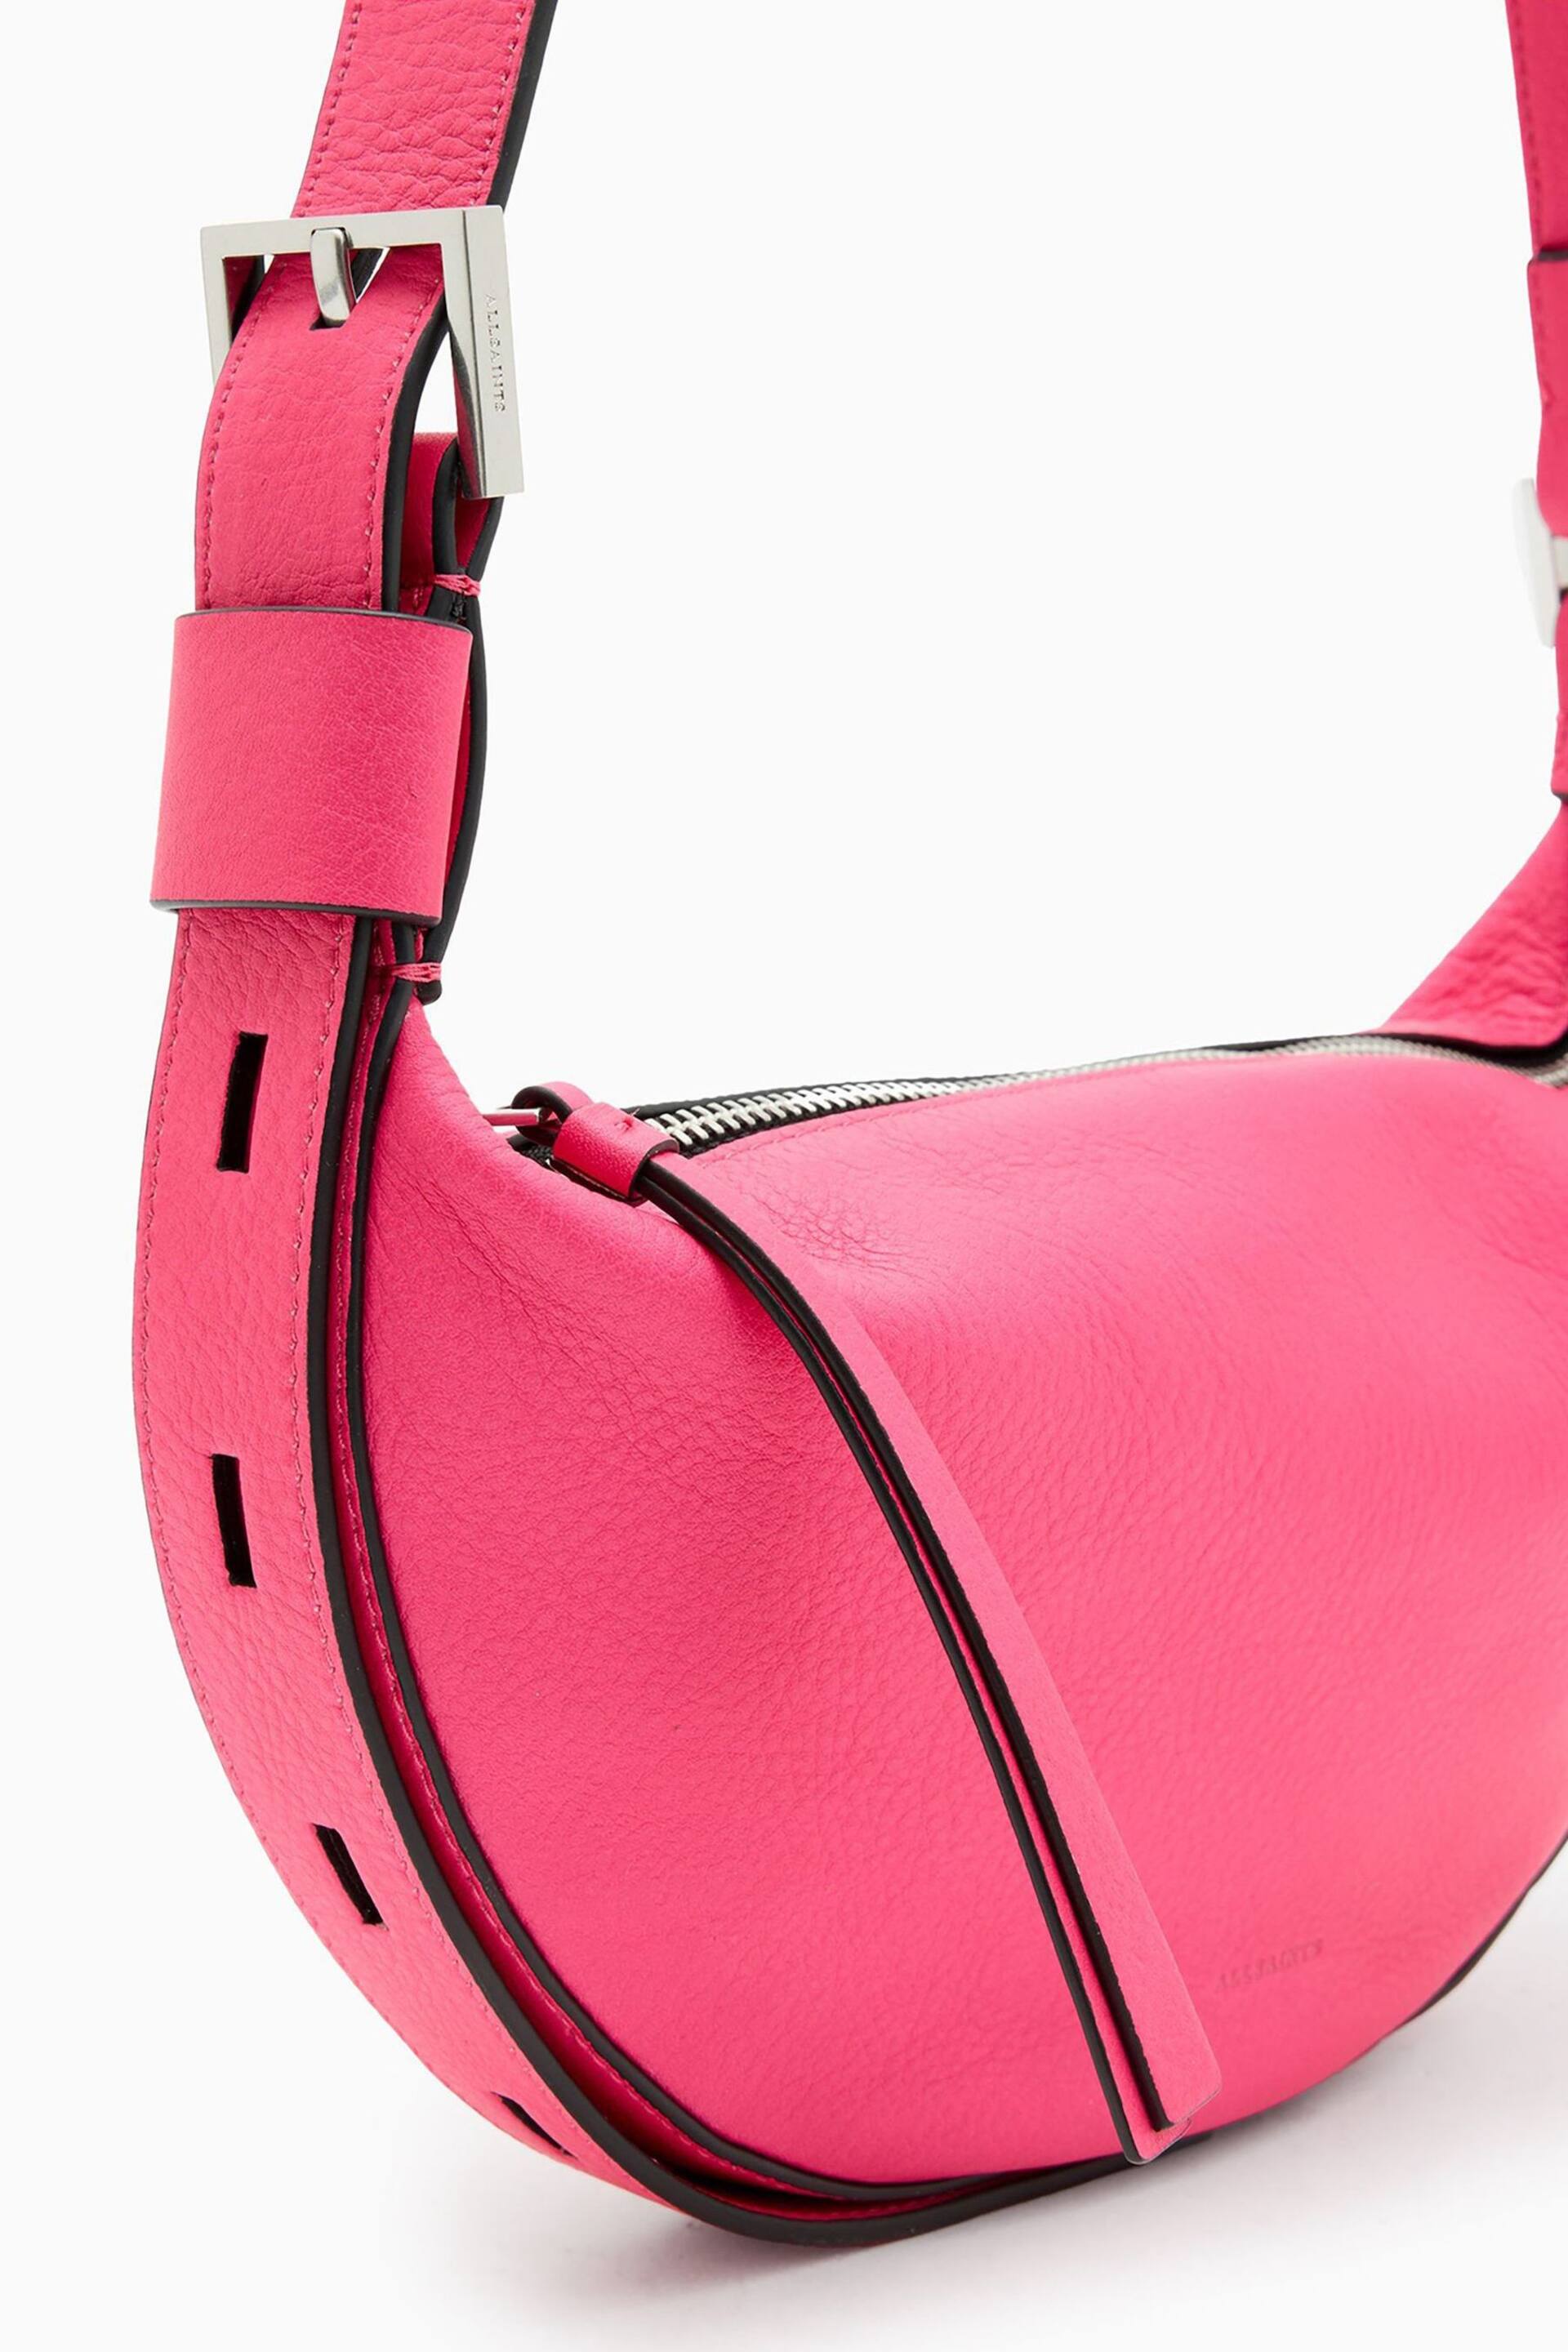 AllSaints Pink Half Moon Cross-Body Bag - Image 5 of 6